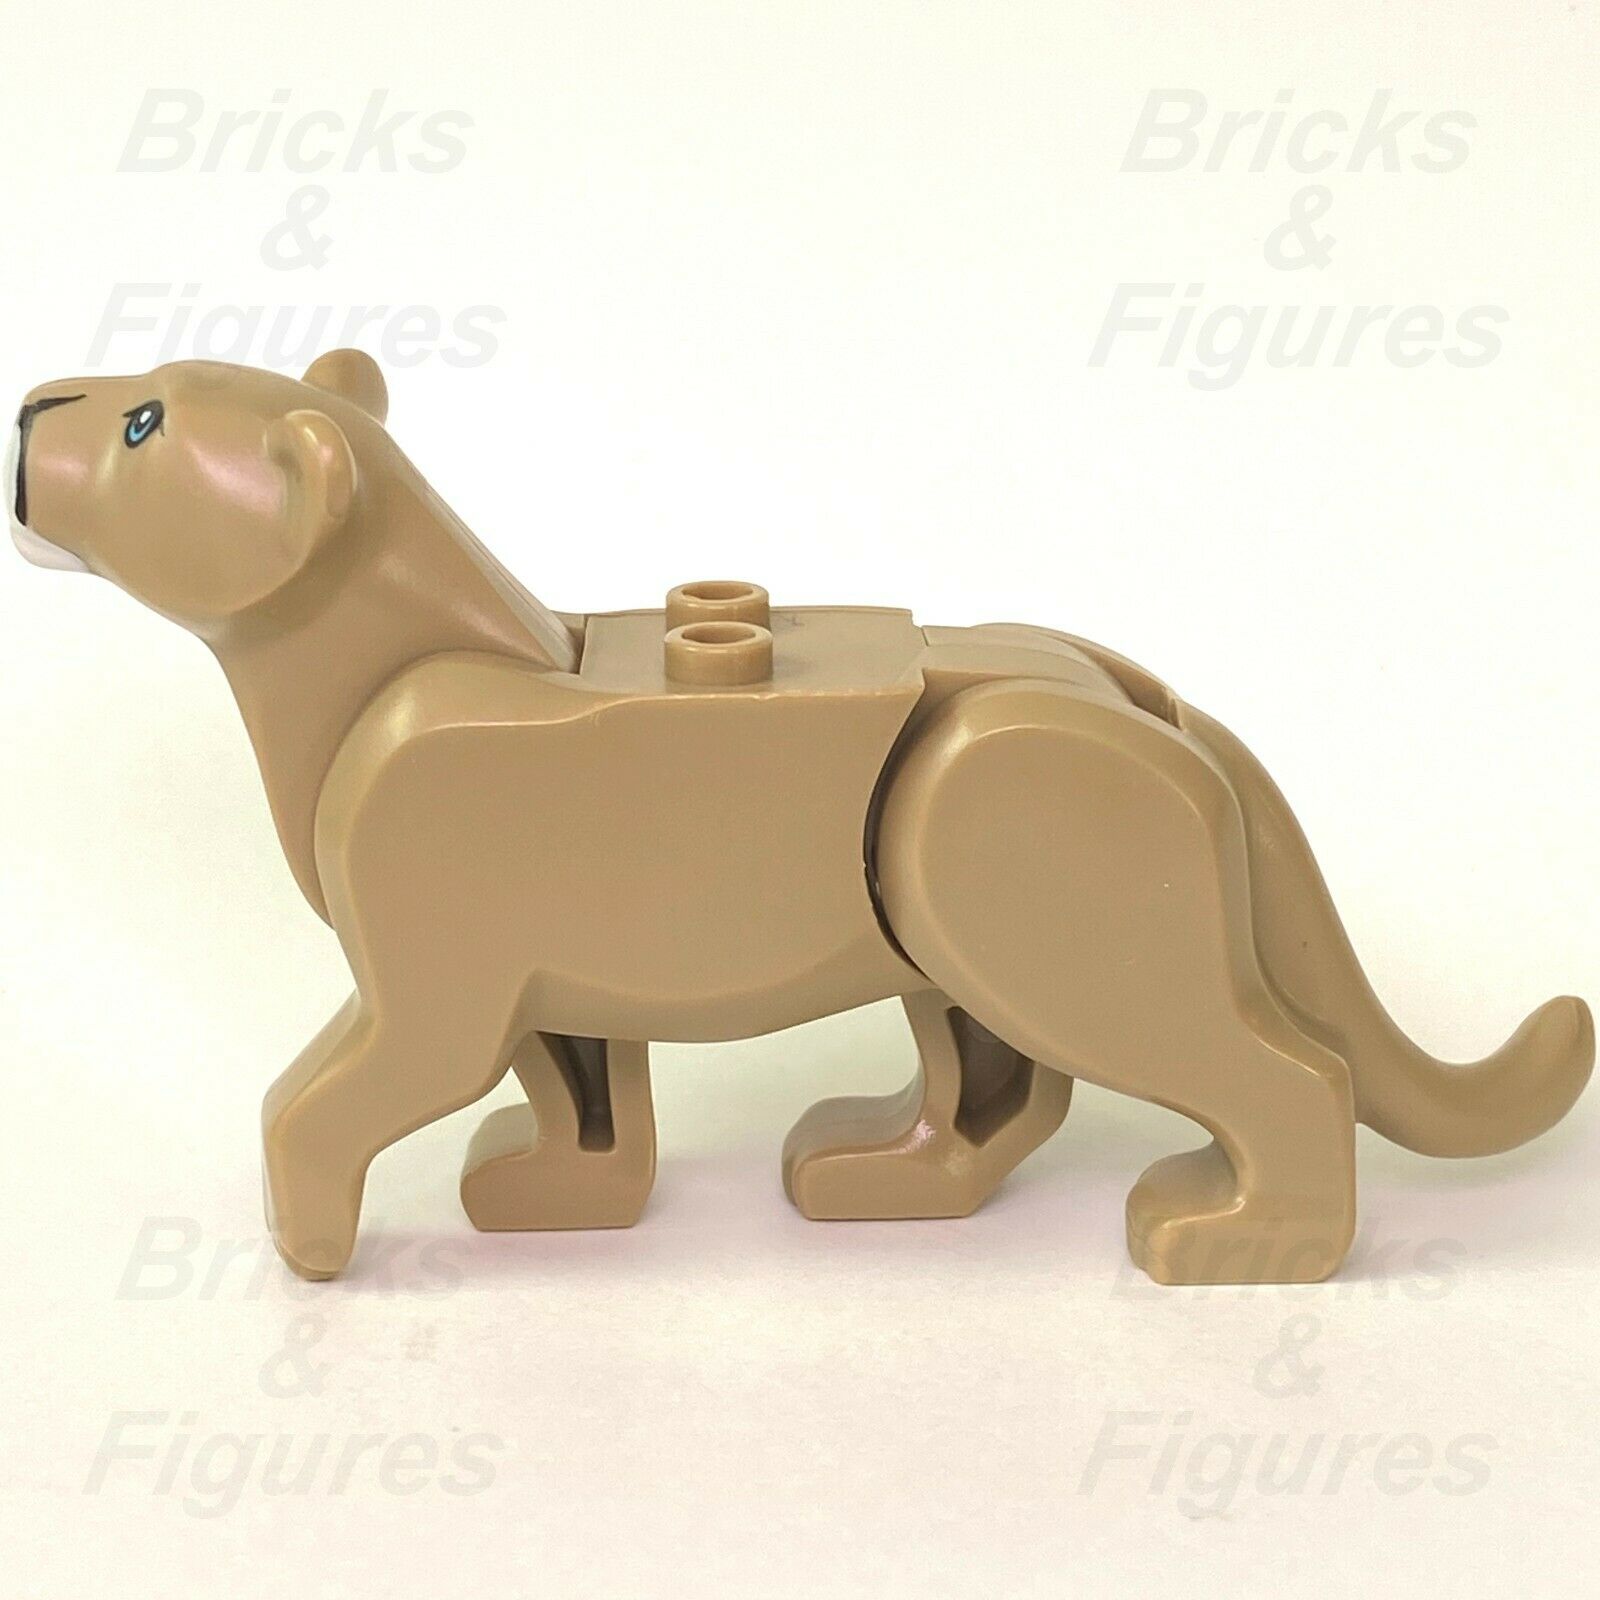 New Town City Police LEGO Mountain Lion Animal Cat Minifigure Part 60174 - Bricks & Figures